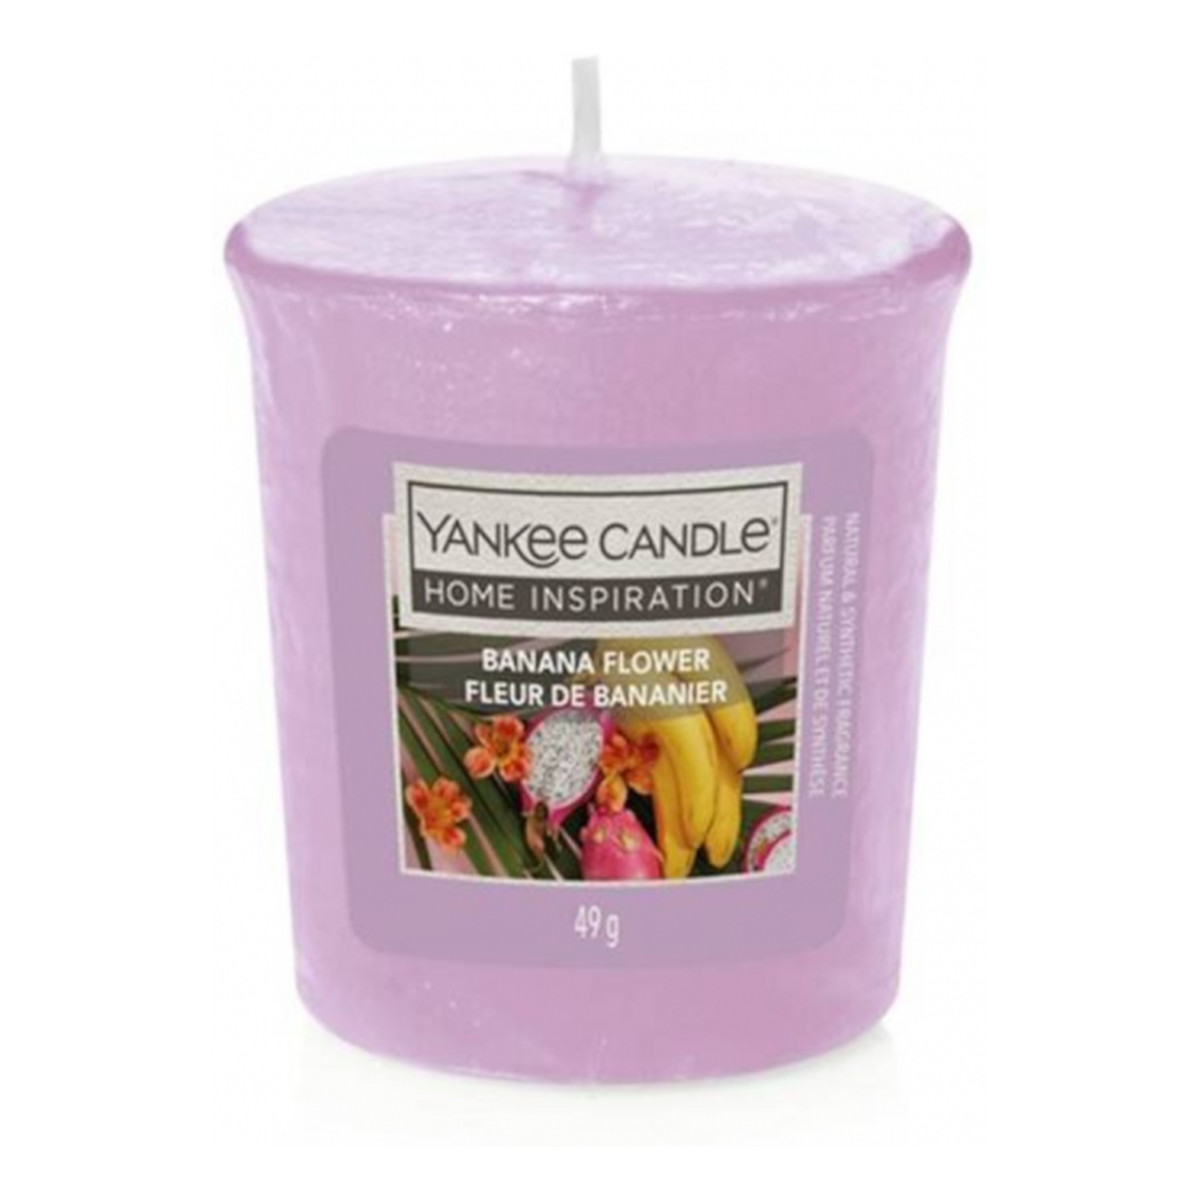 Yankee Candle Home Inspiration Świeca zapachowa Banana Flower 49g